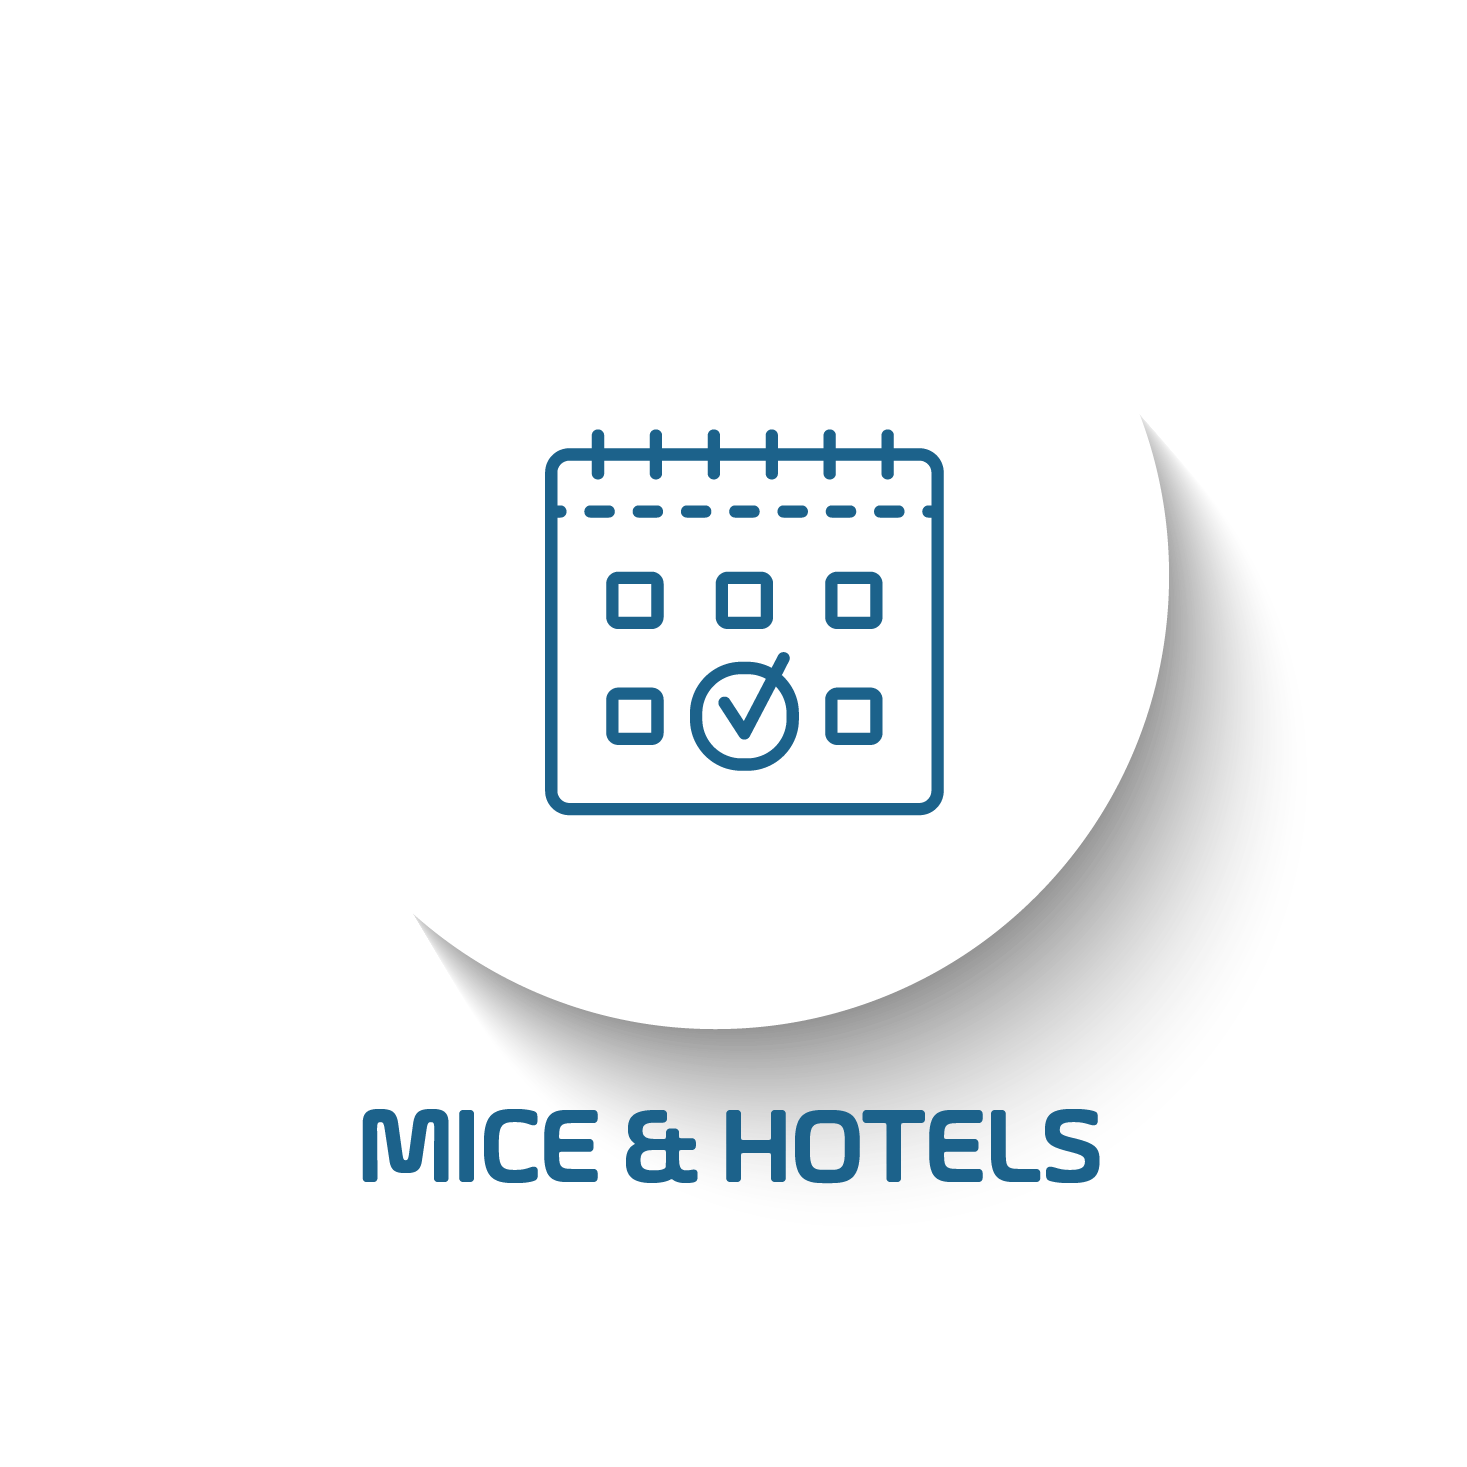 Mice & Hotels